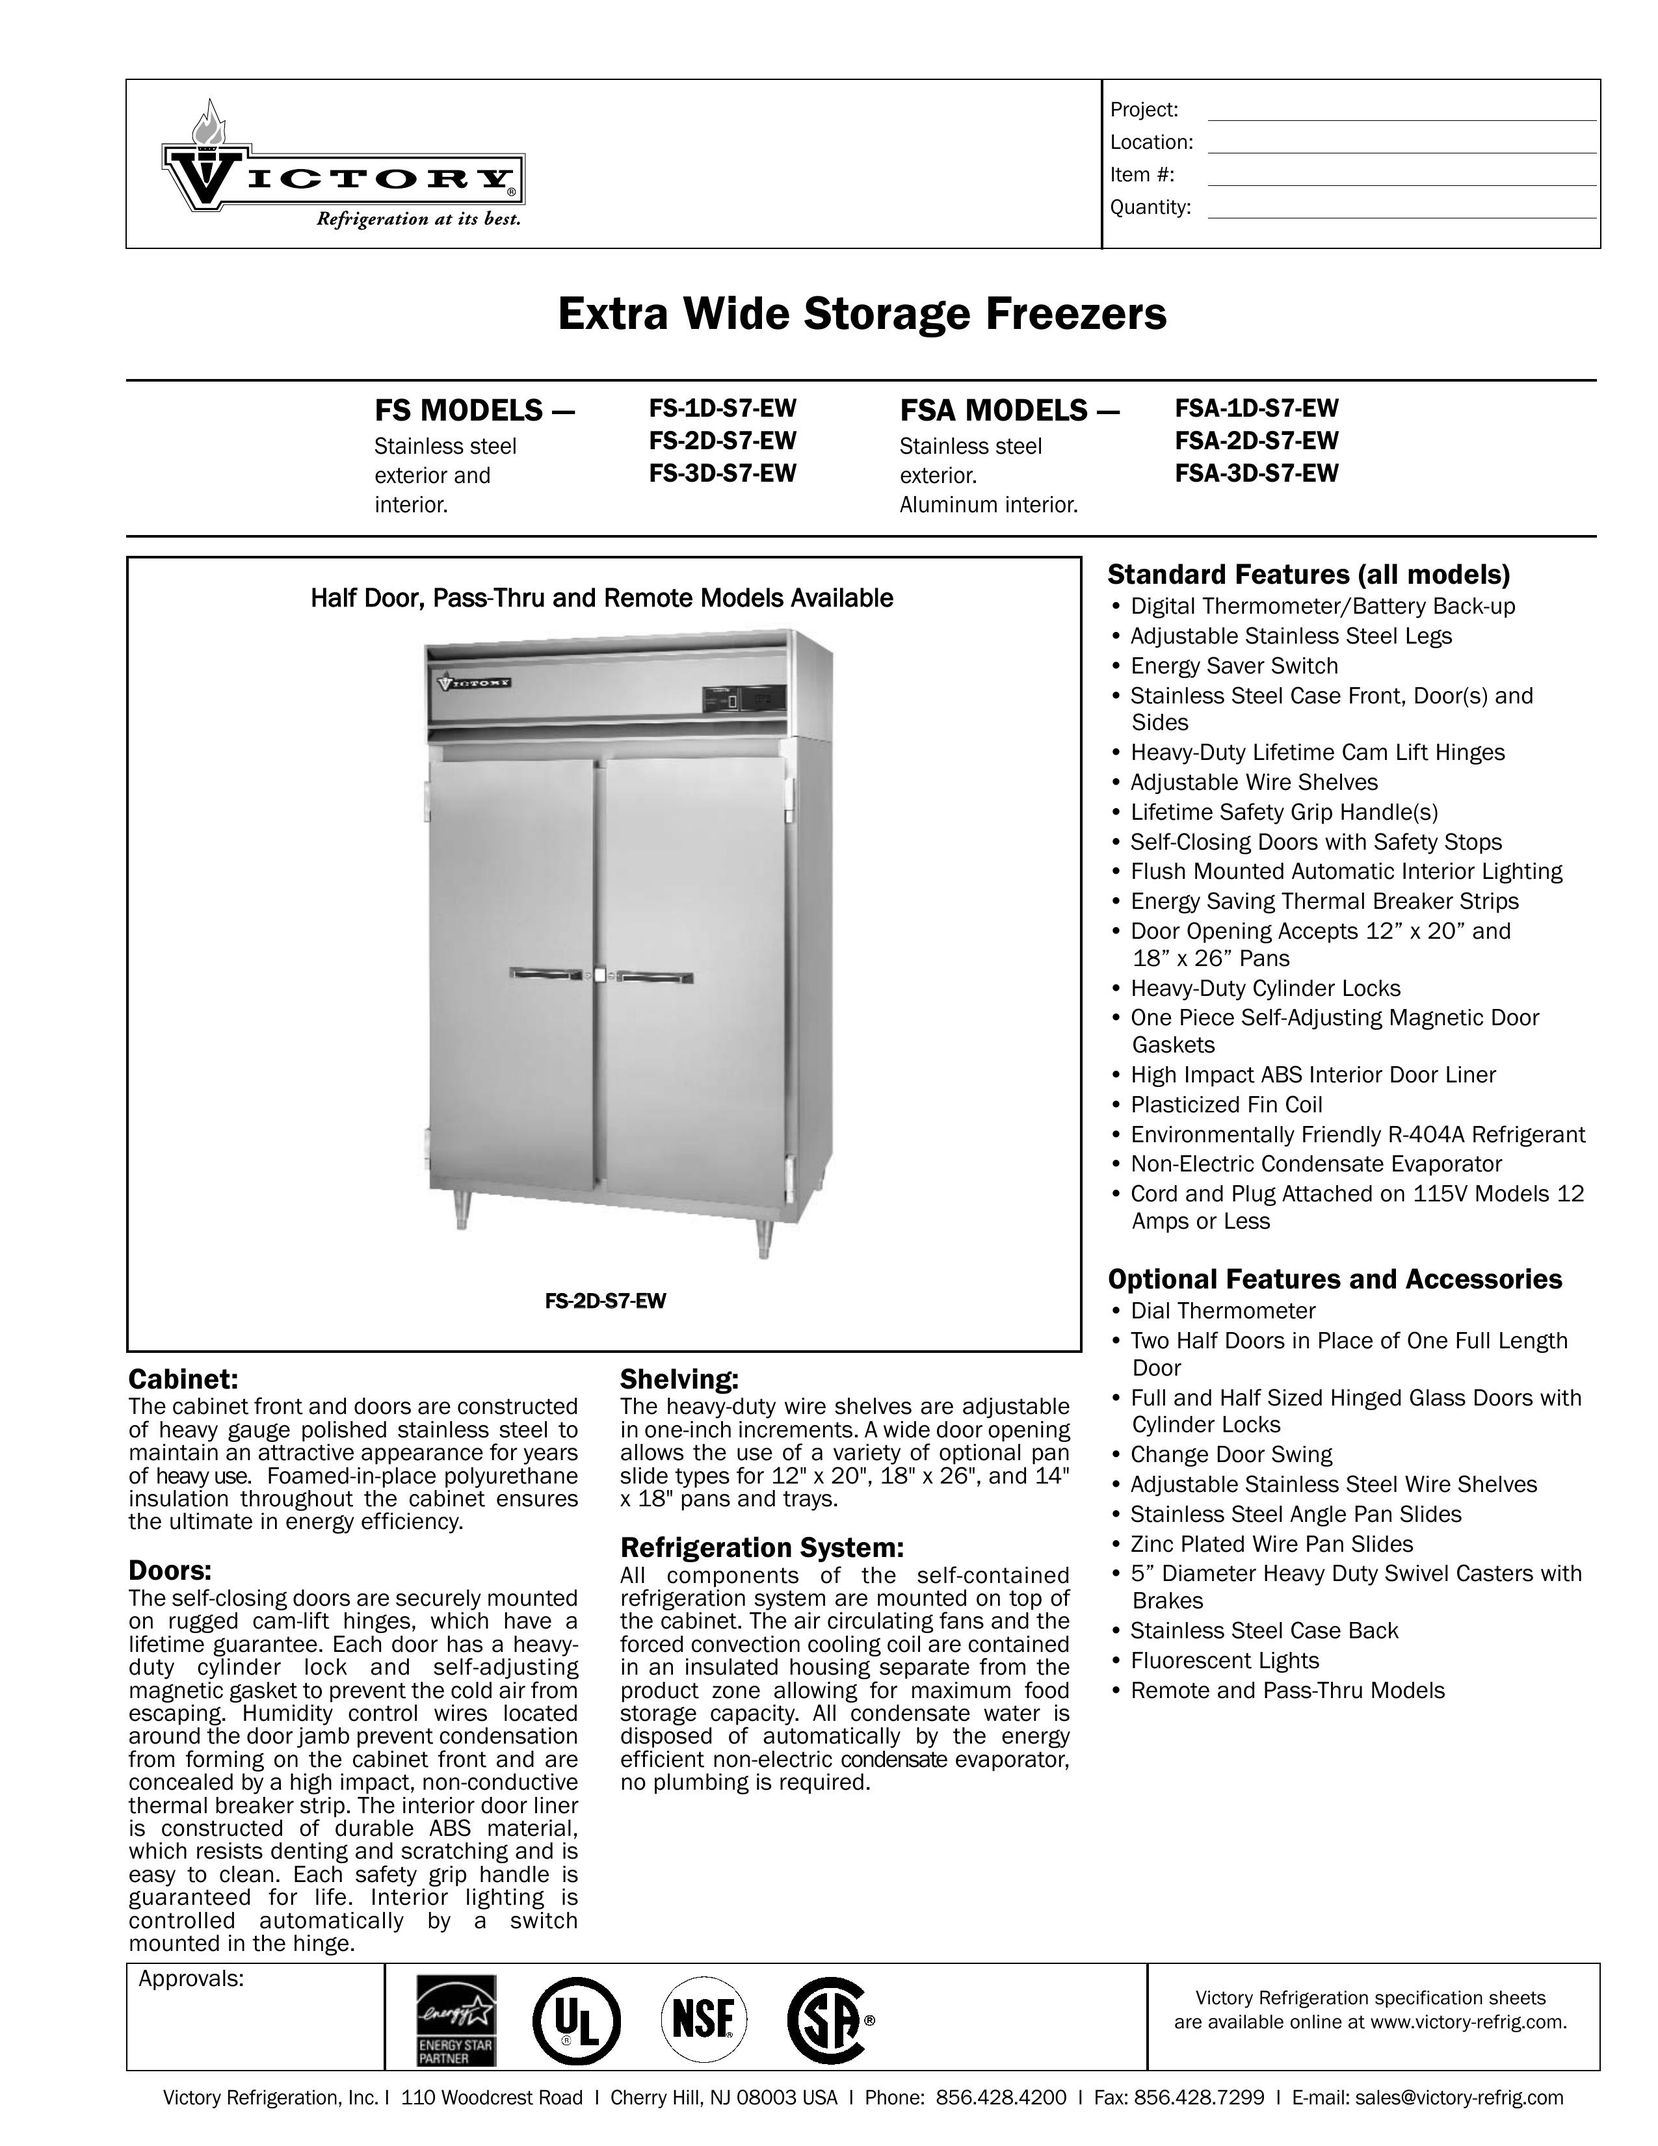 Victory Refrigeration FS-3D-S7-EW Freezer User Manual